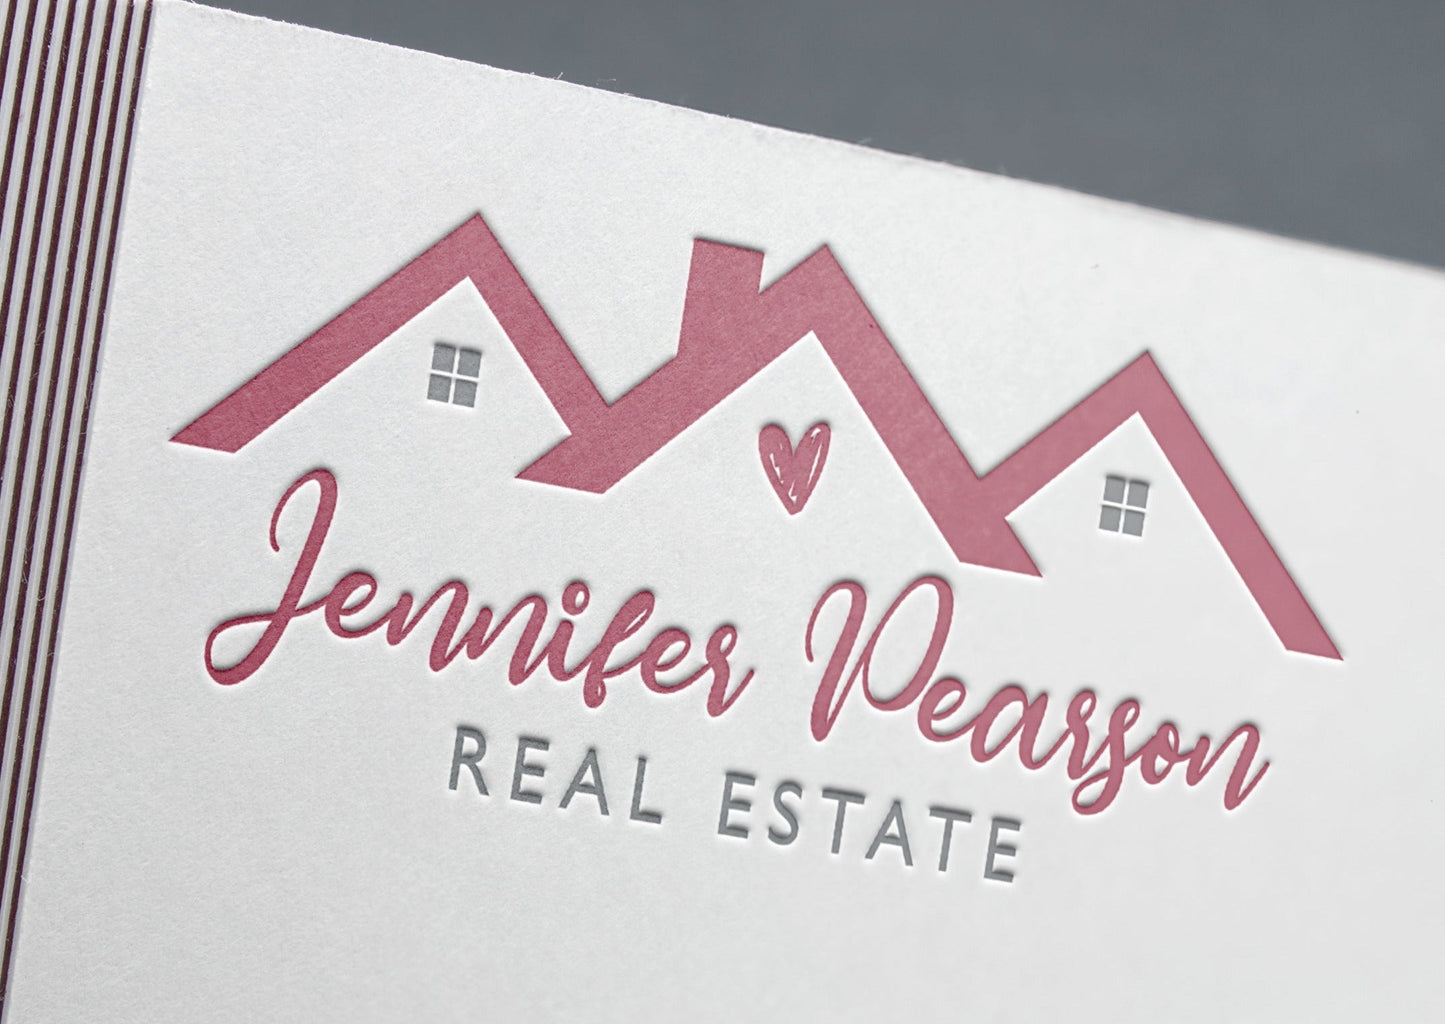 Real Estate Logo Design | Realtor Logo | Personal Branding | Logo Design | Realty | Property Management | Heart Design | Home | House